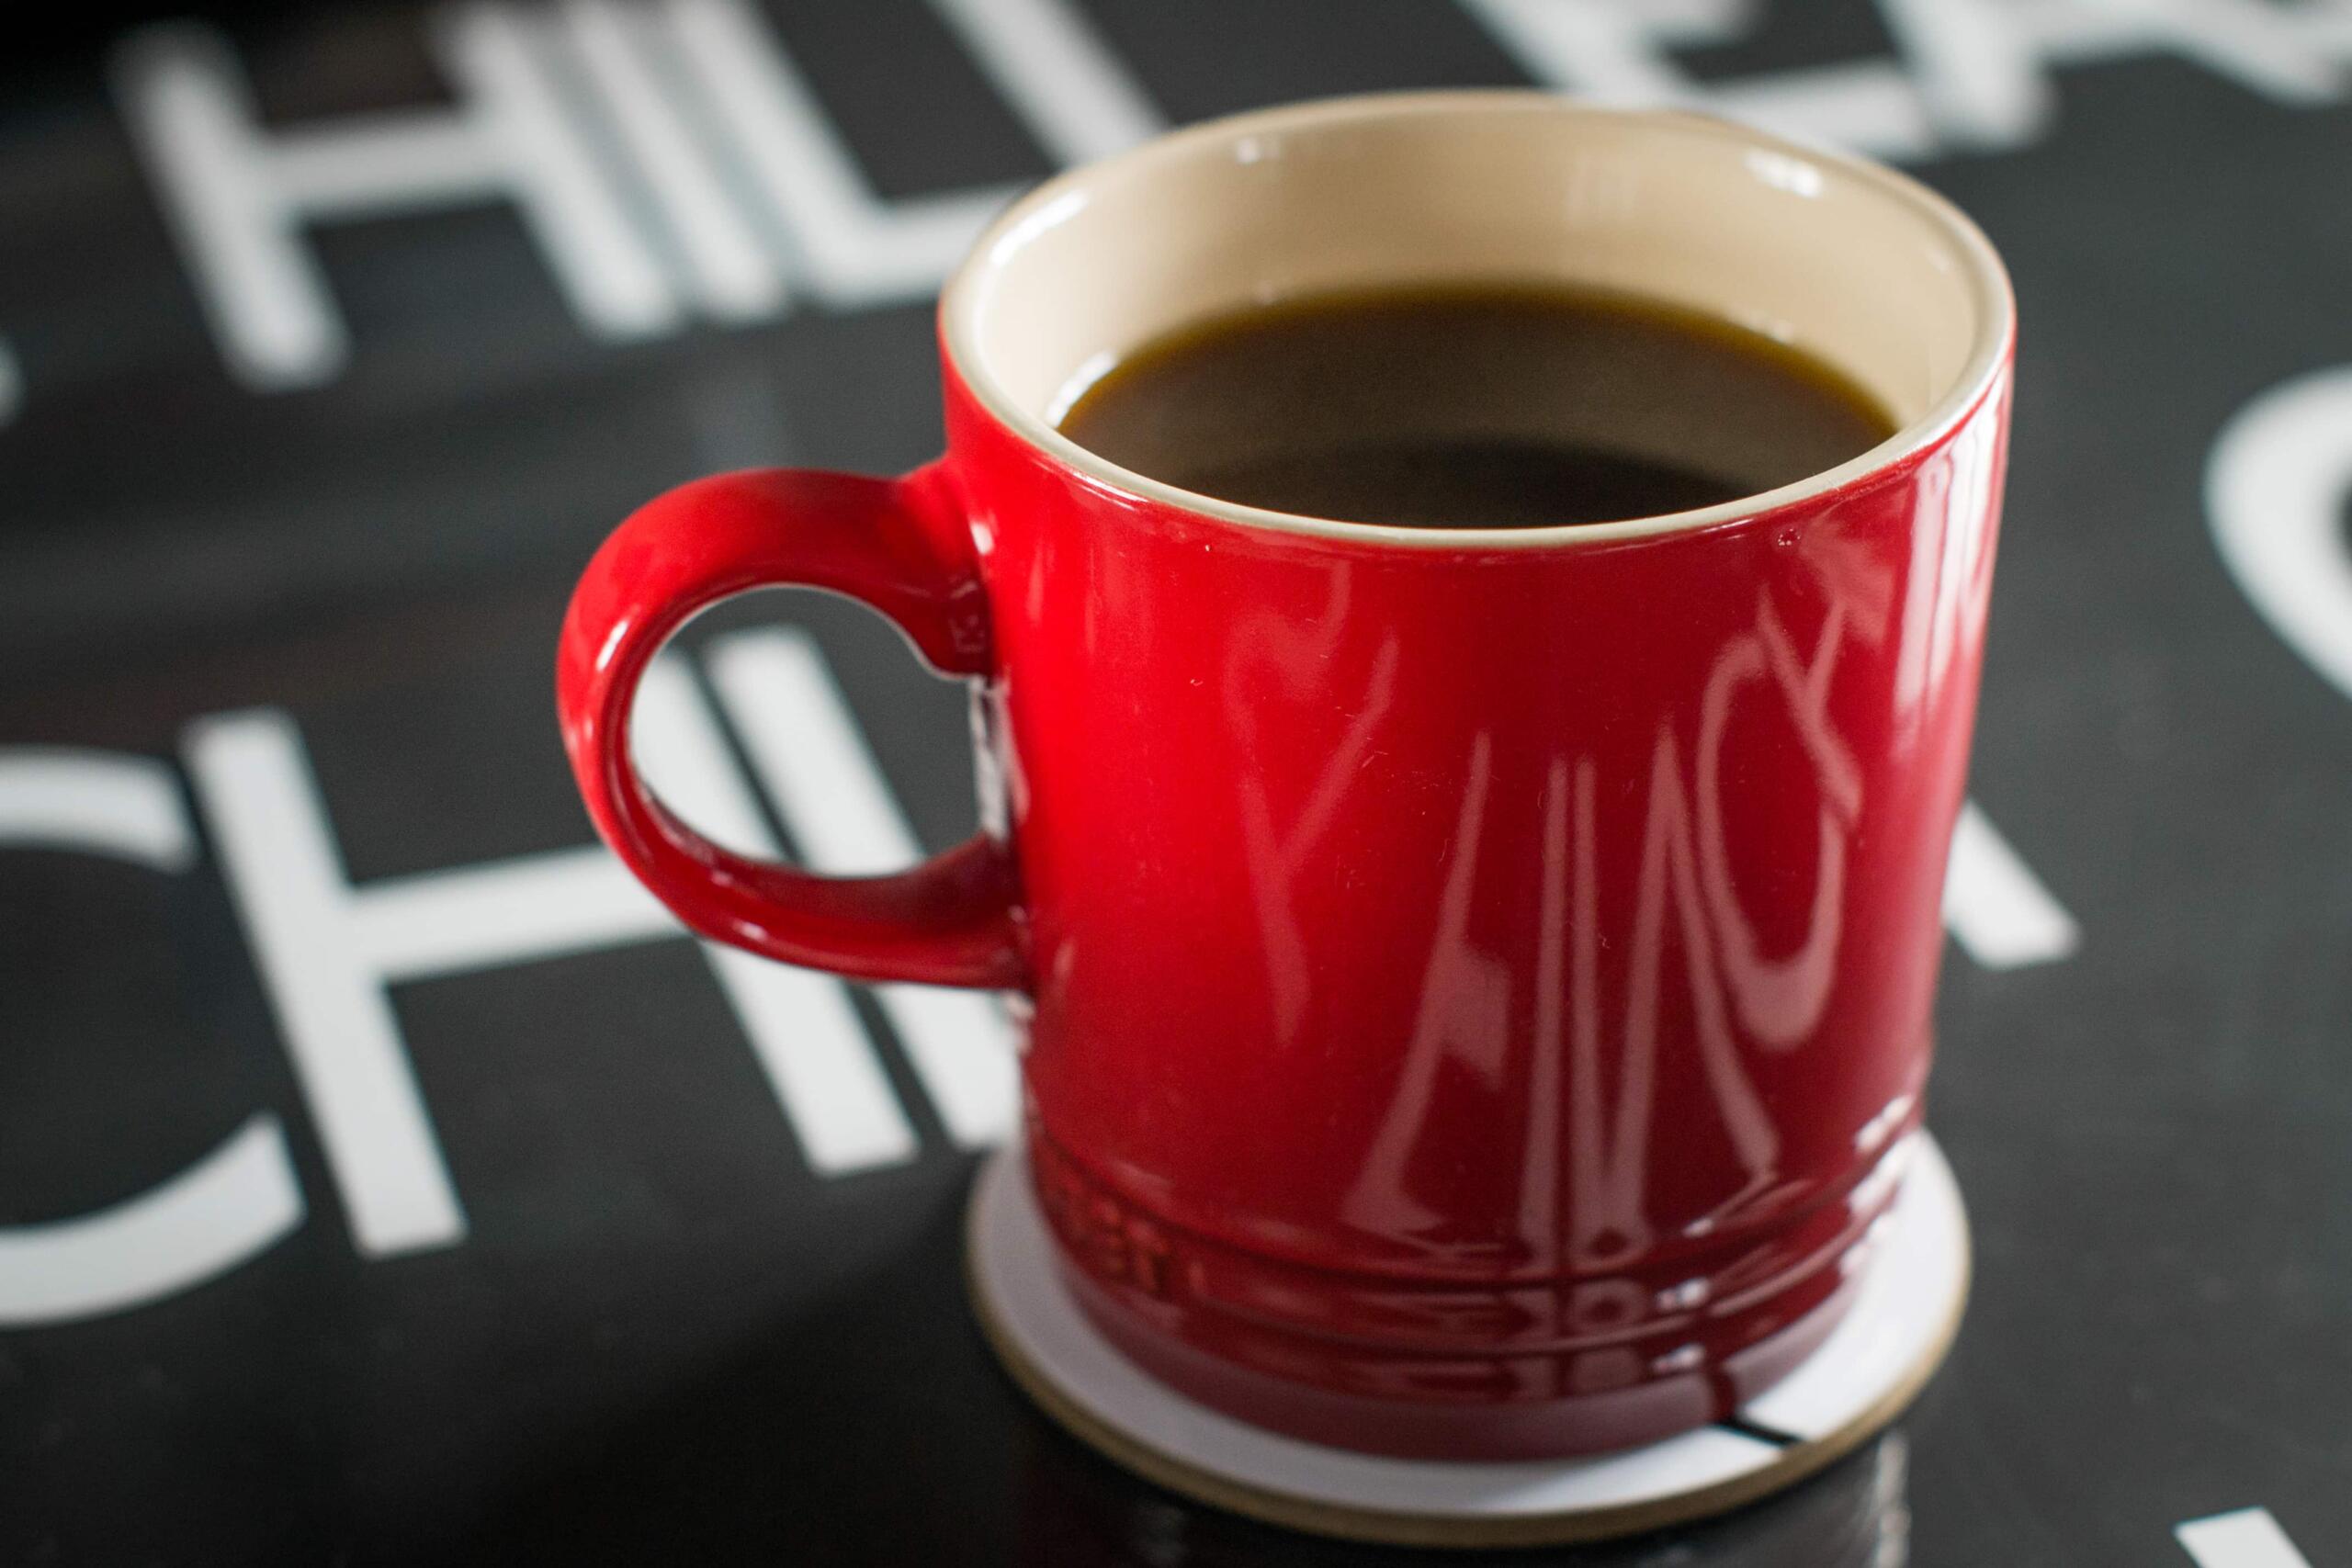 Red mug of coffee on black table